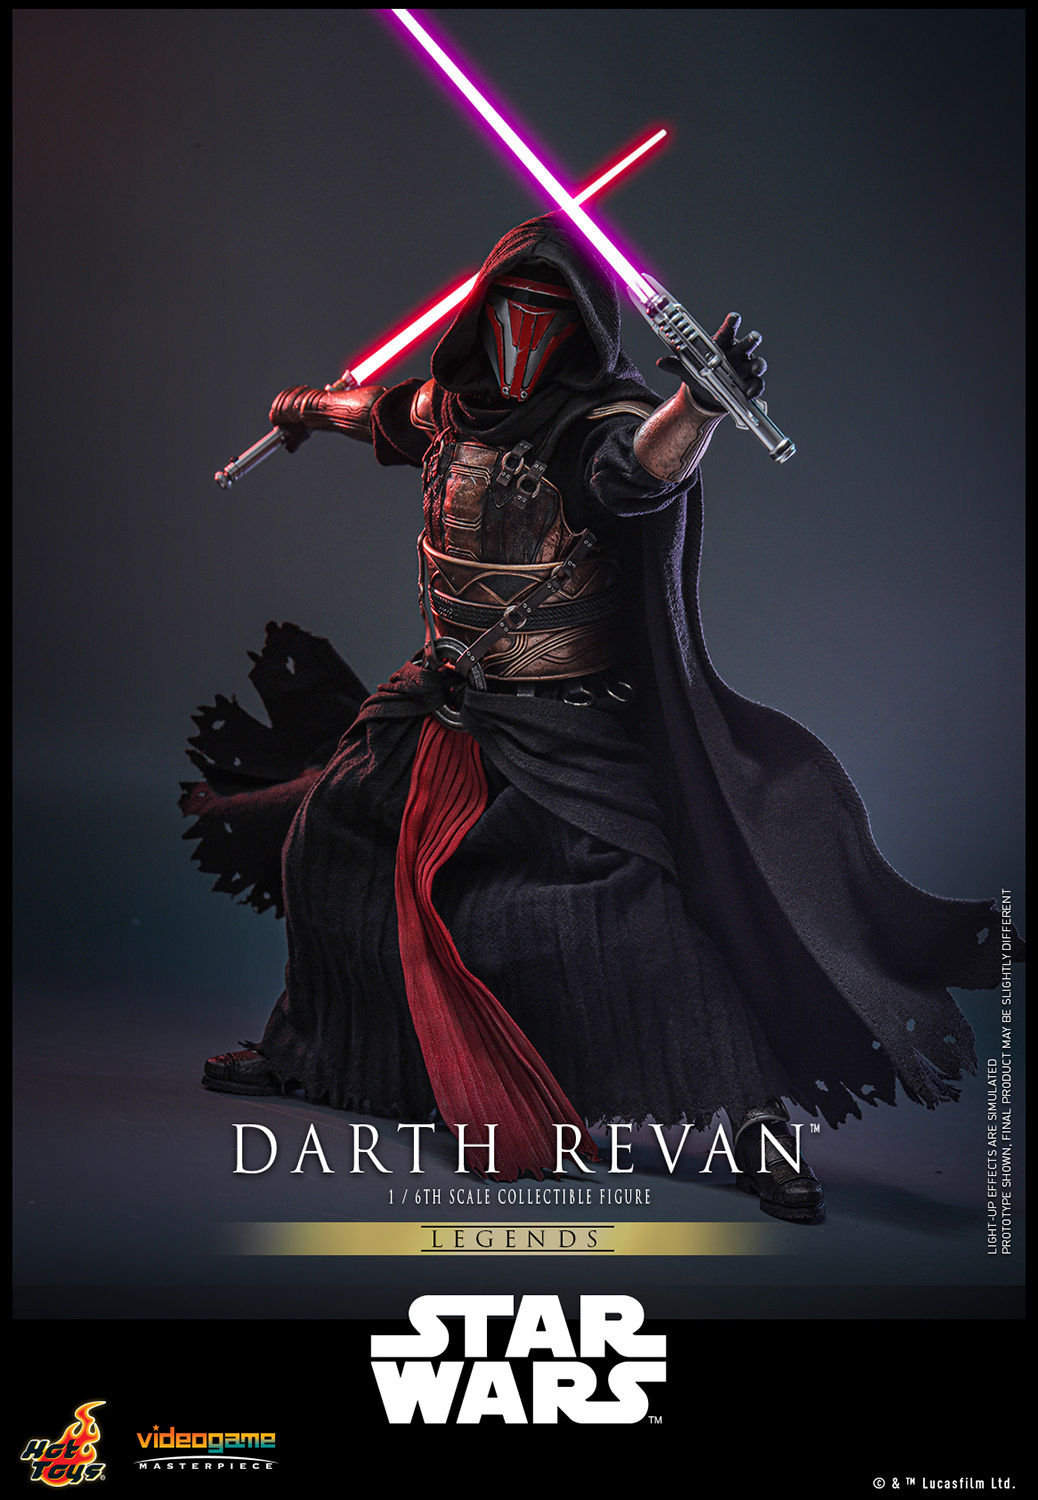 Pre-Order Hot Toys Star Wars Darth Revan Sixth Scale Figure VGM62